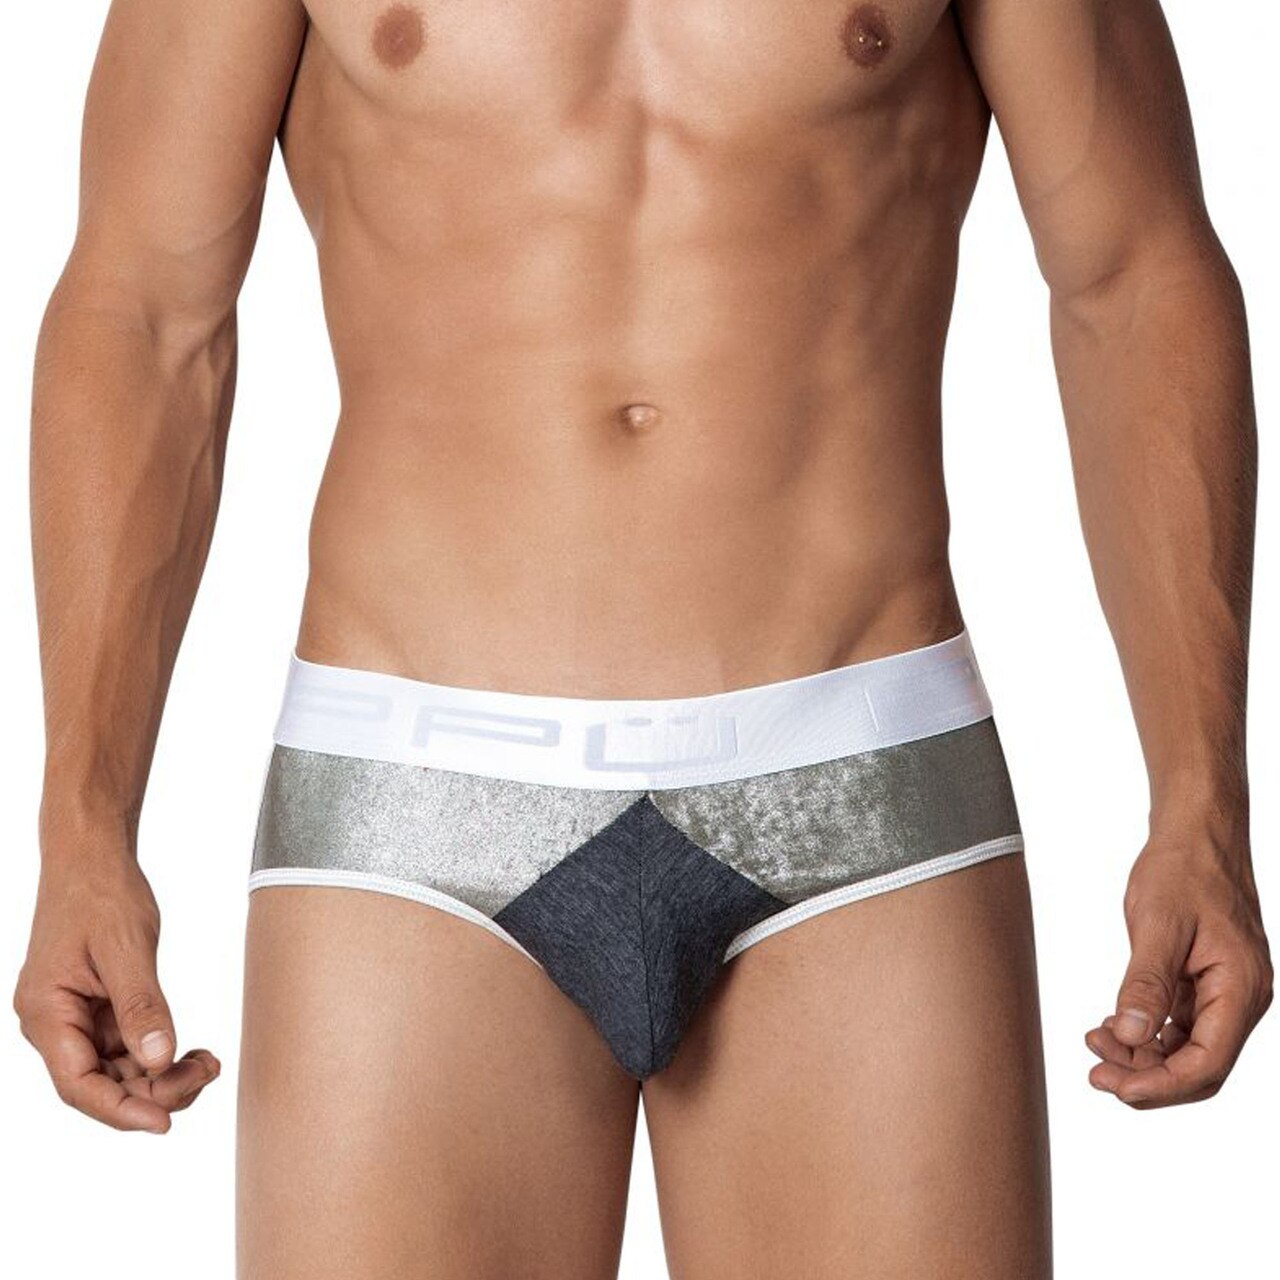 SALE - Mens PPU Underwear Jockstrap Brief Black with Silver